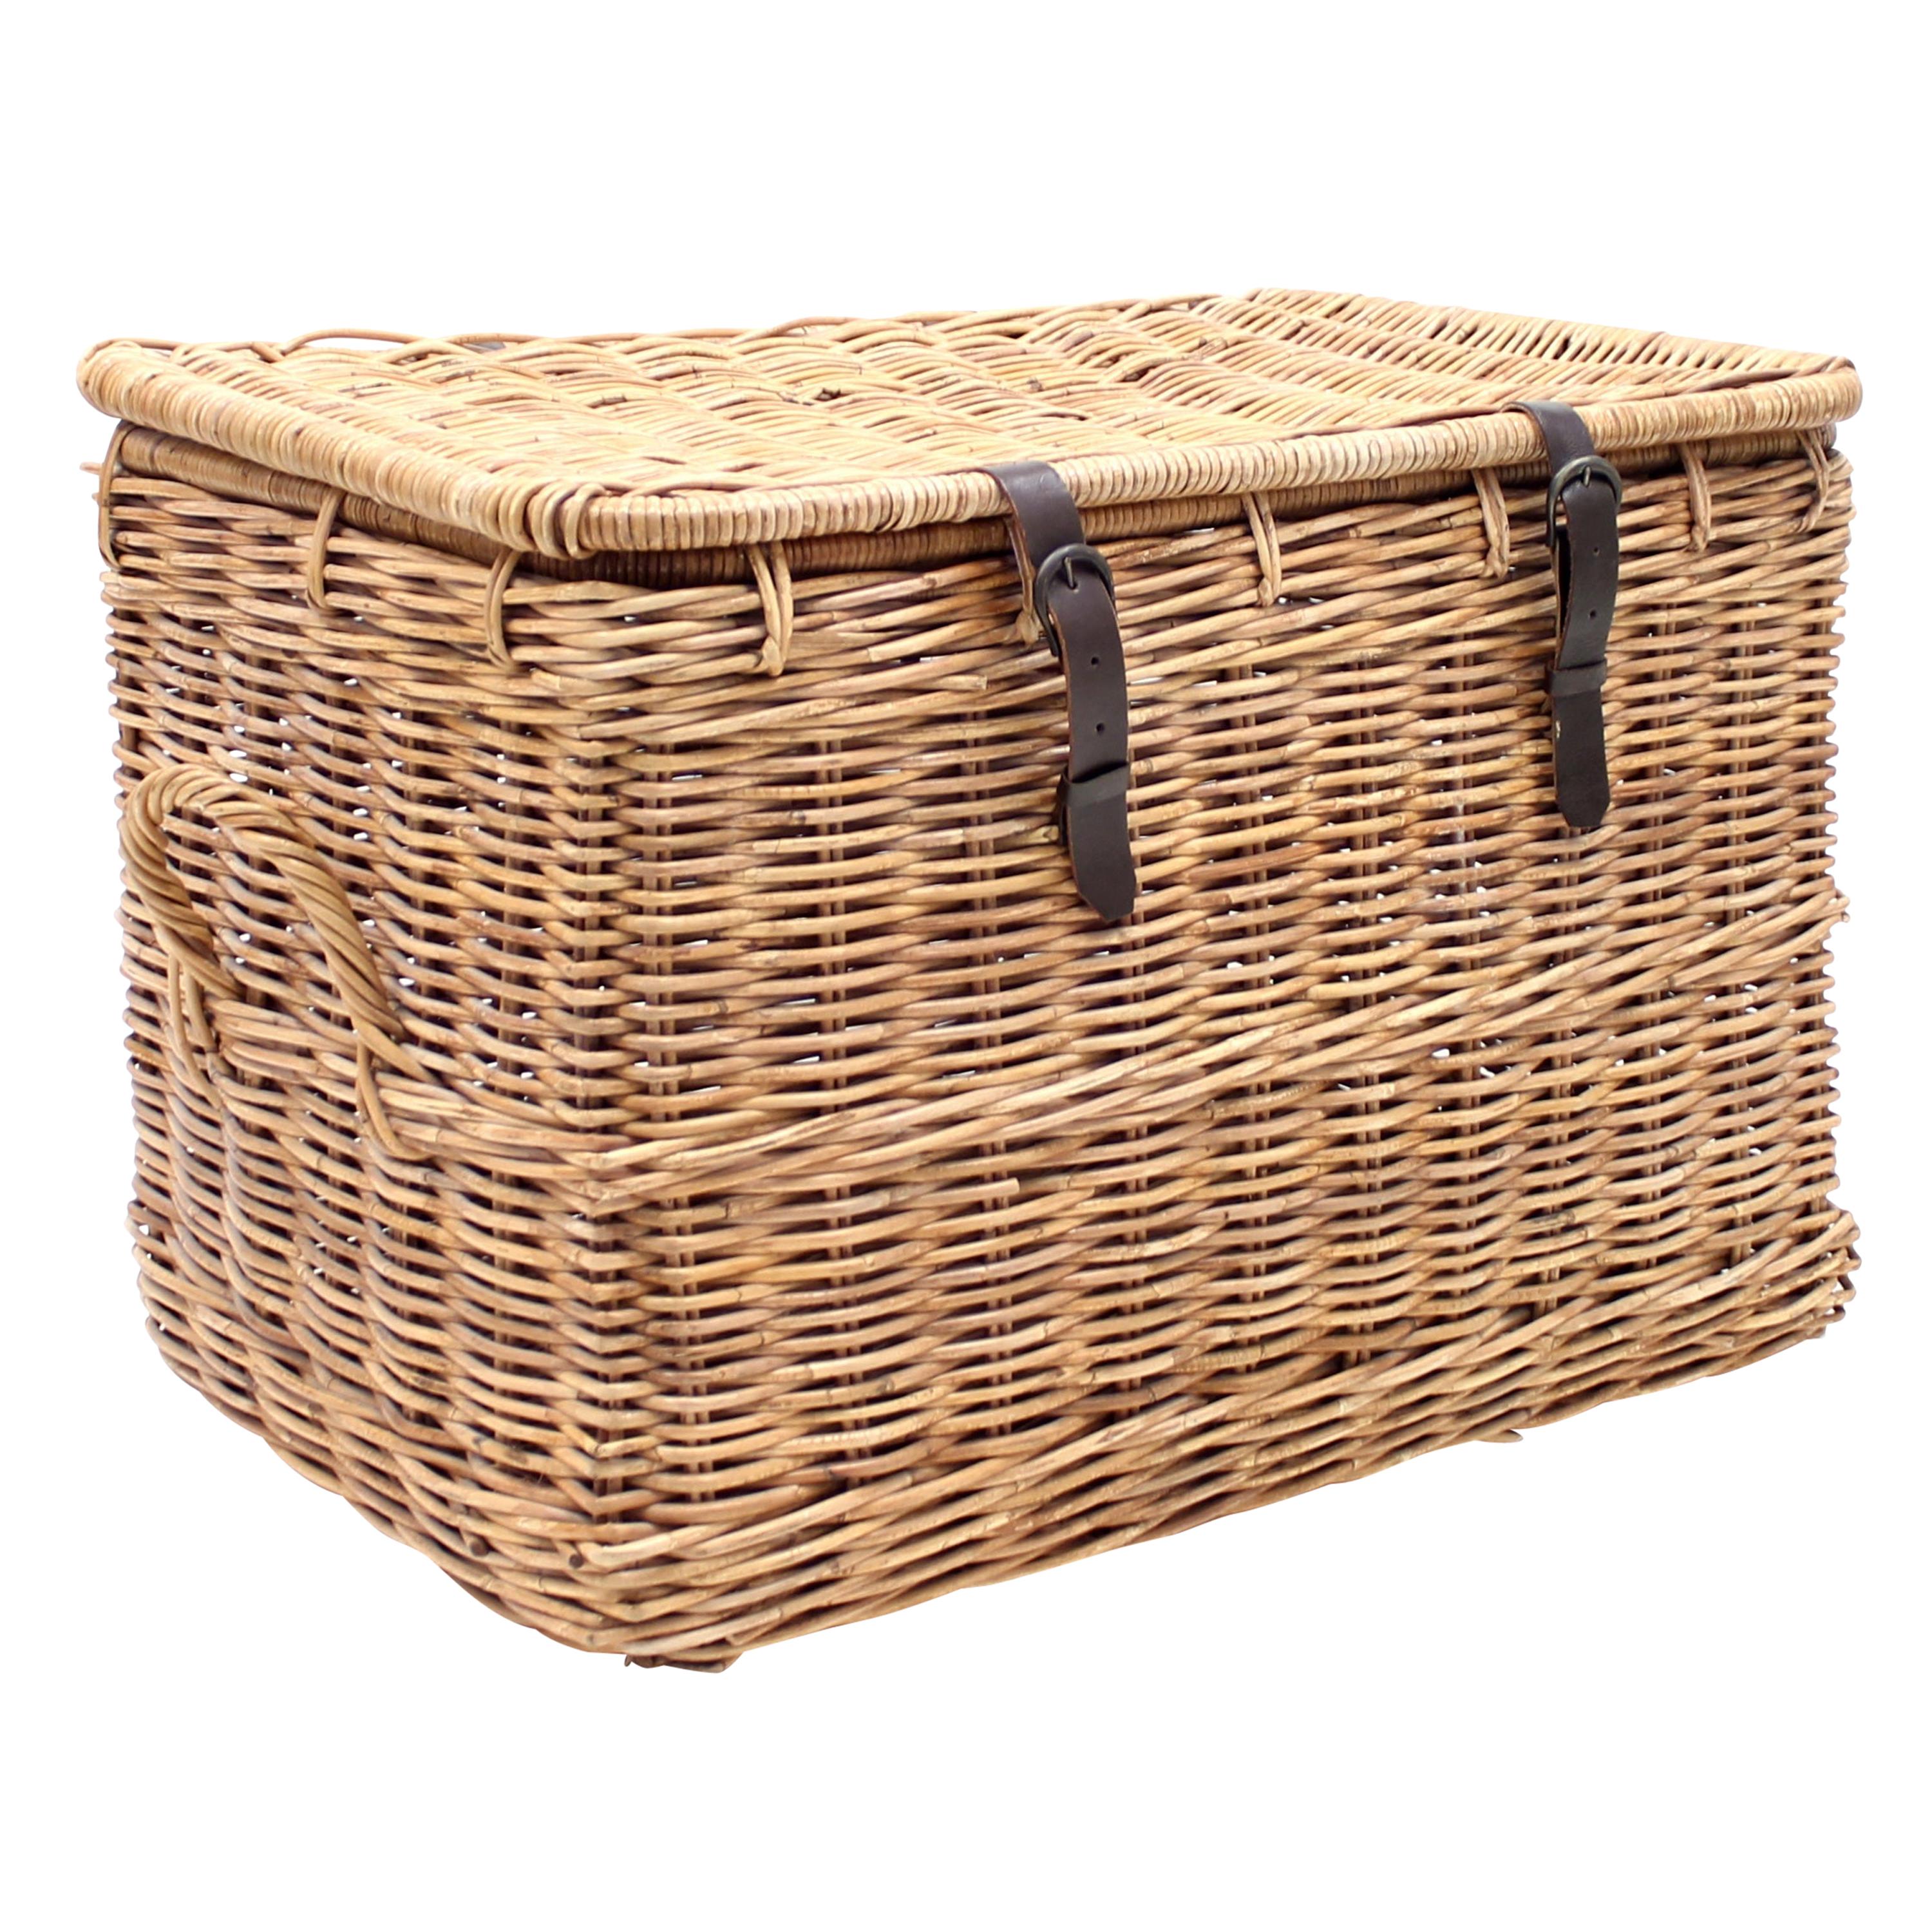 Vintage Midcentury Wicker Laundry Basket, 1950s